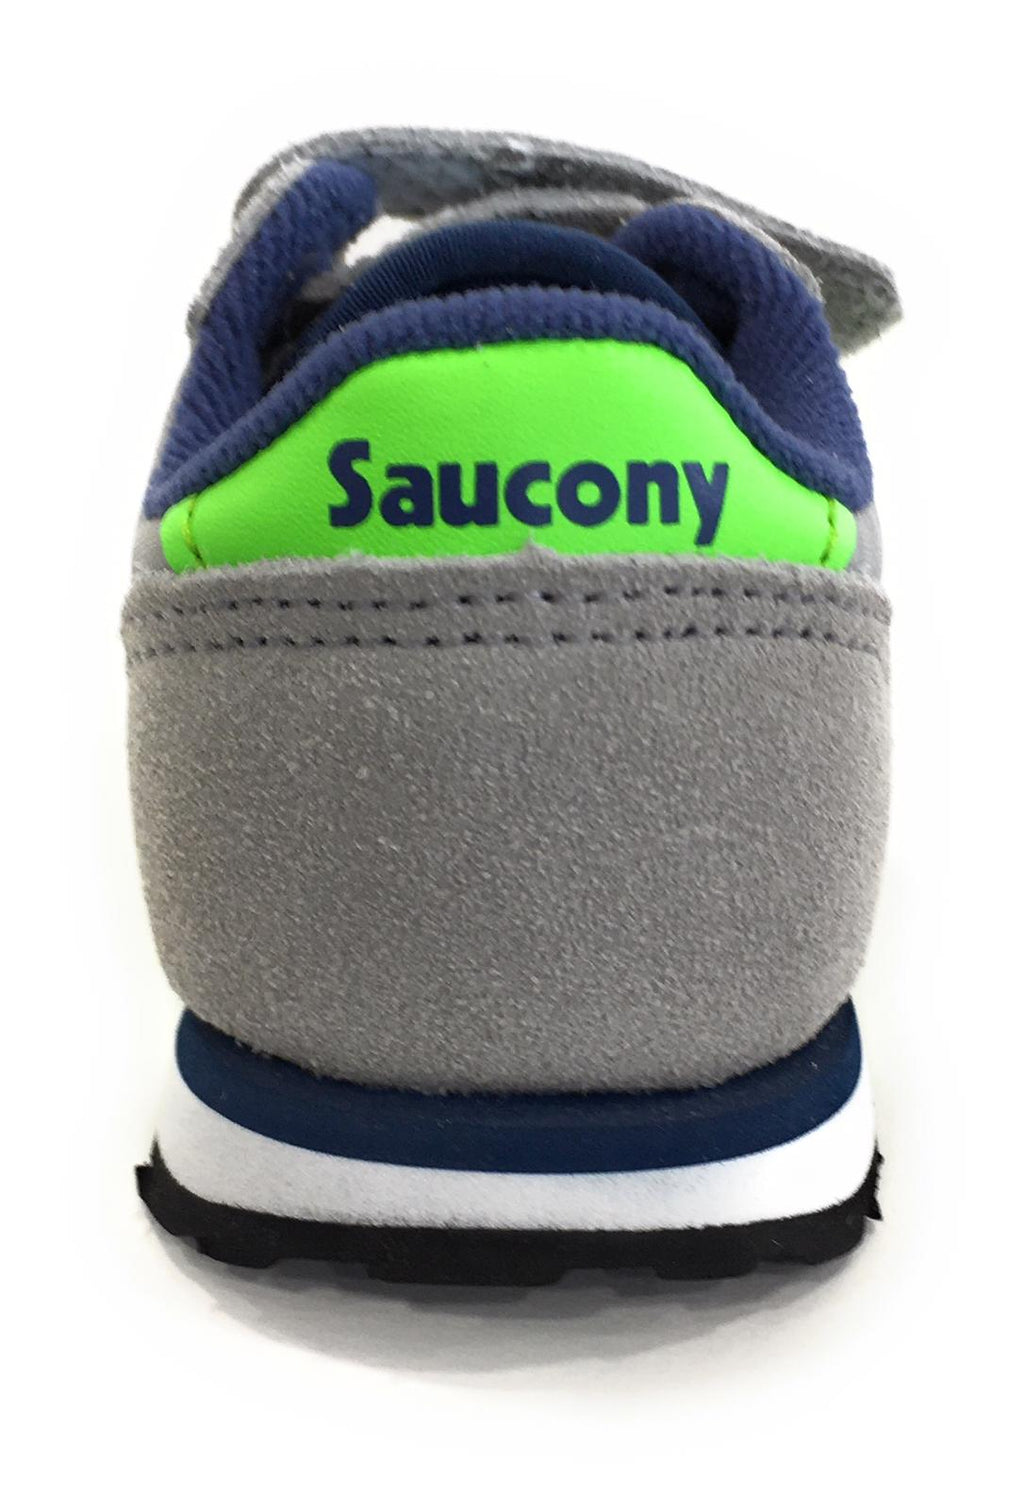 Saucony Sneaker Jazz HL strappo SL263373 | incocciatistore.it